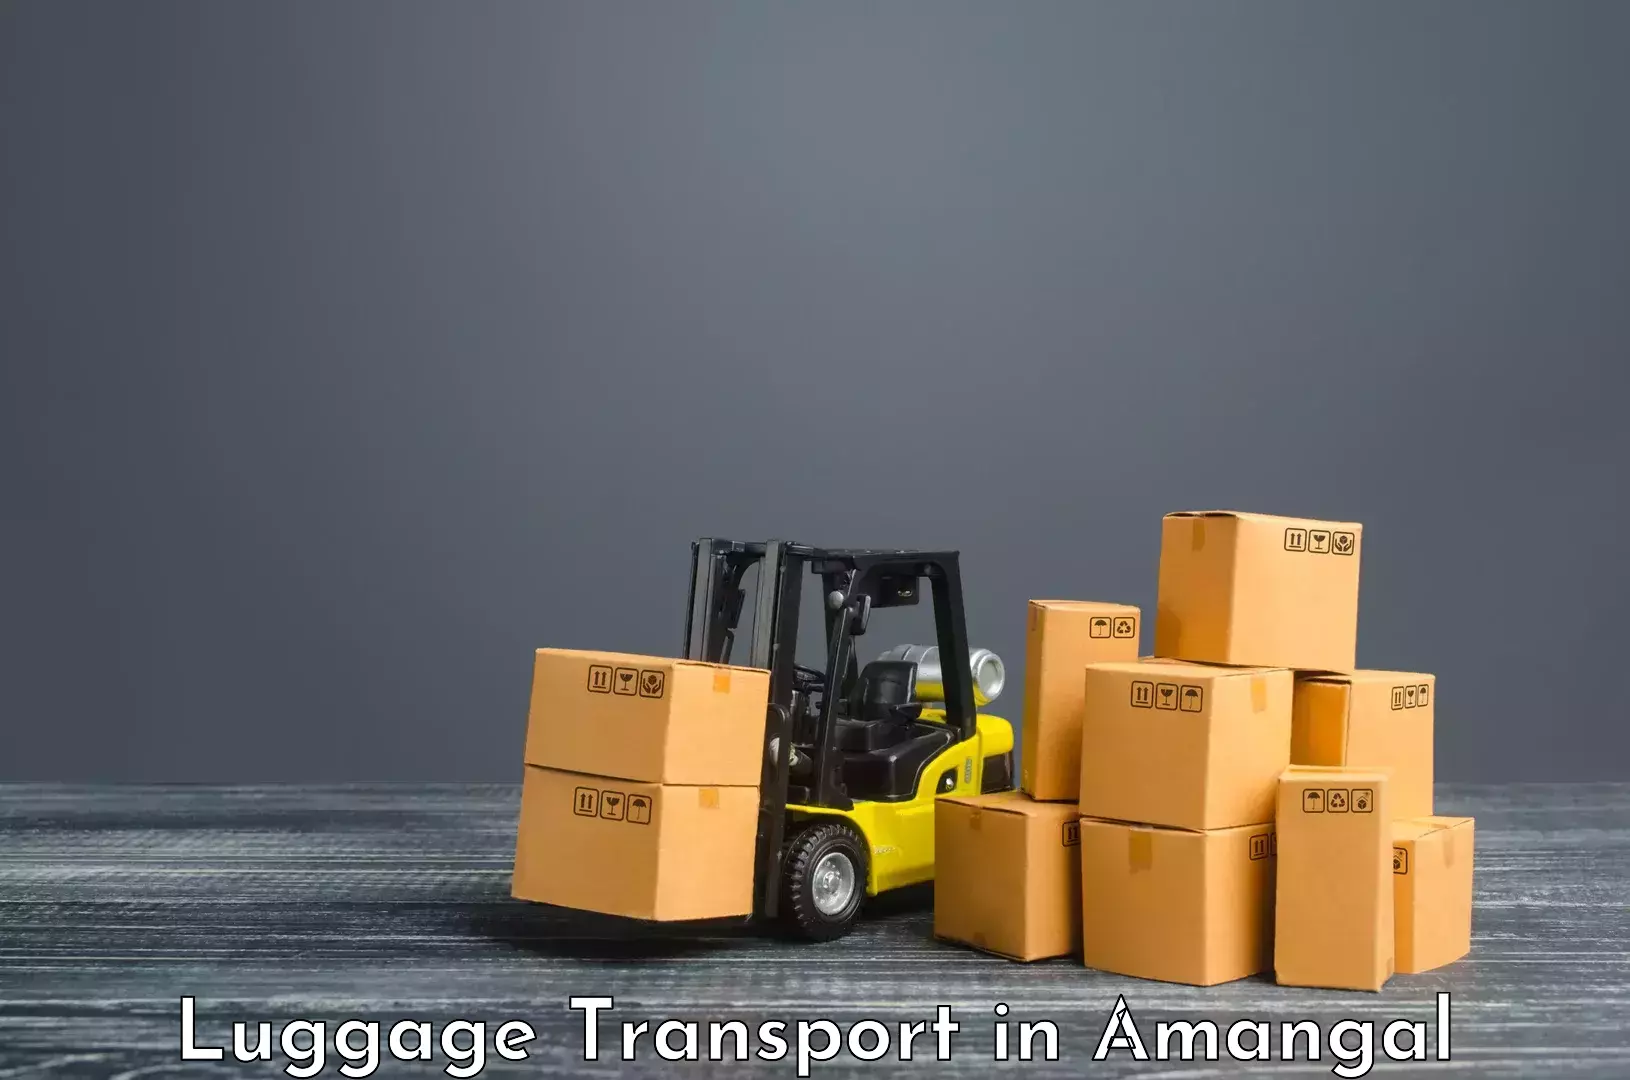 Urgent luggage shipment in Amangal